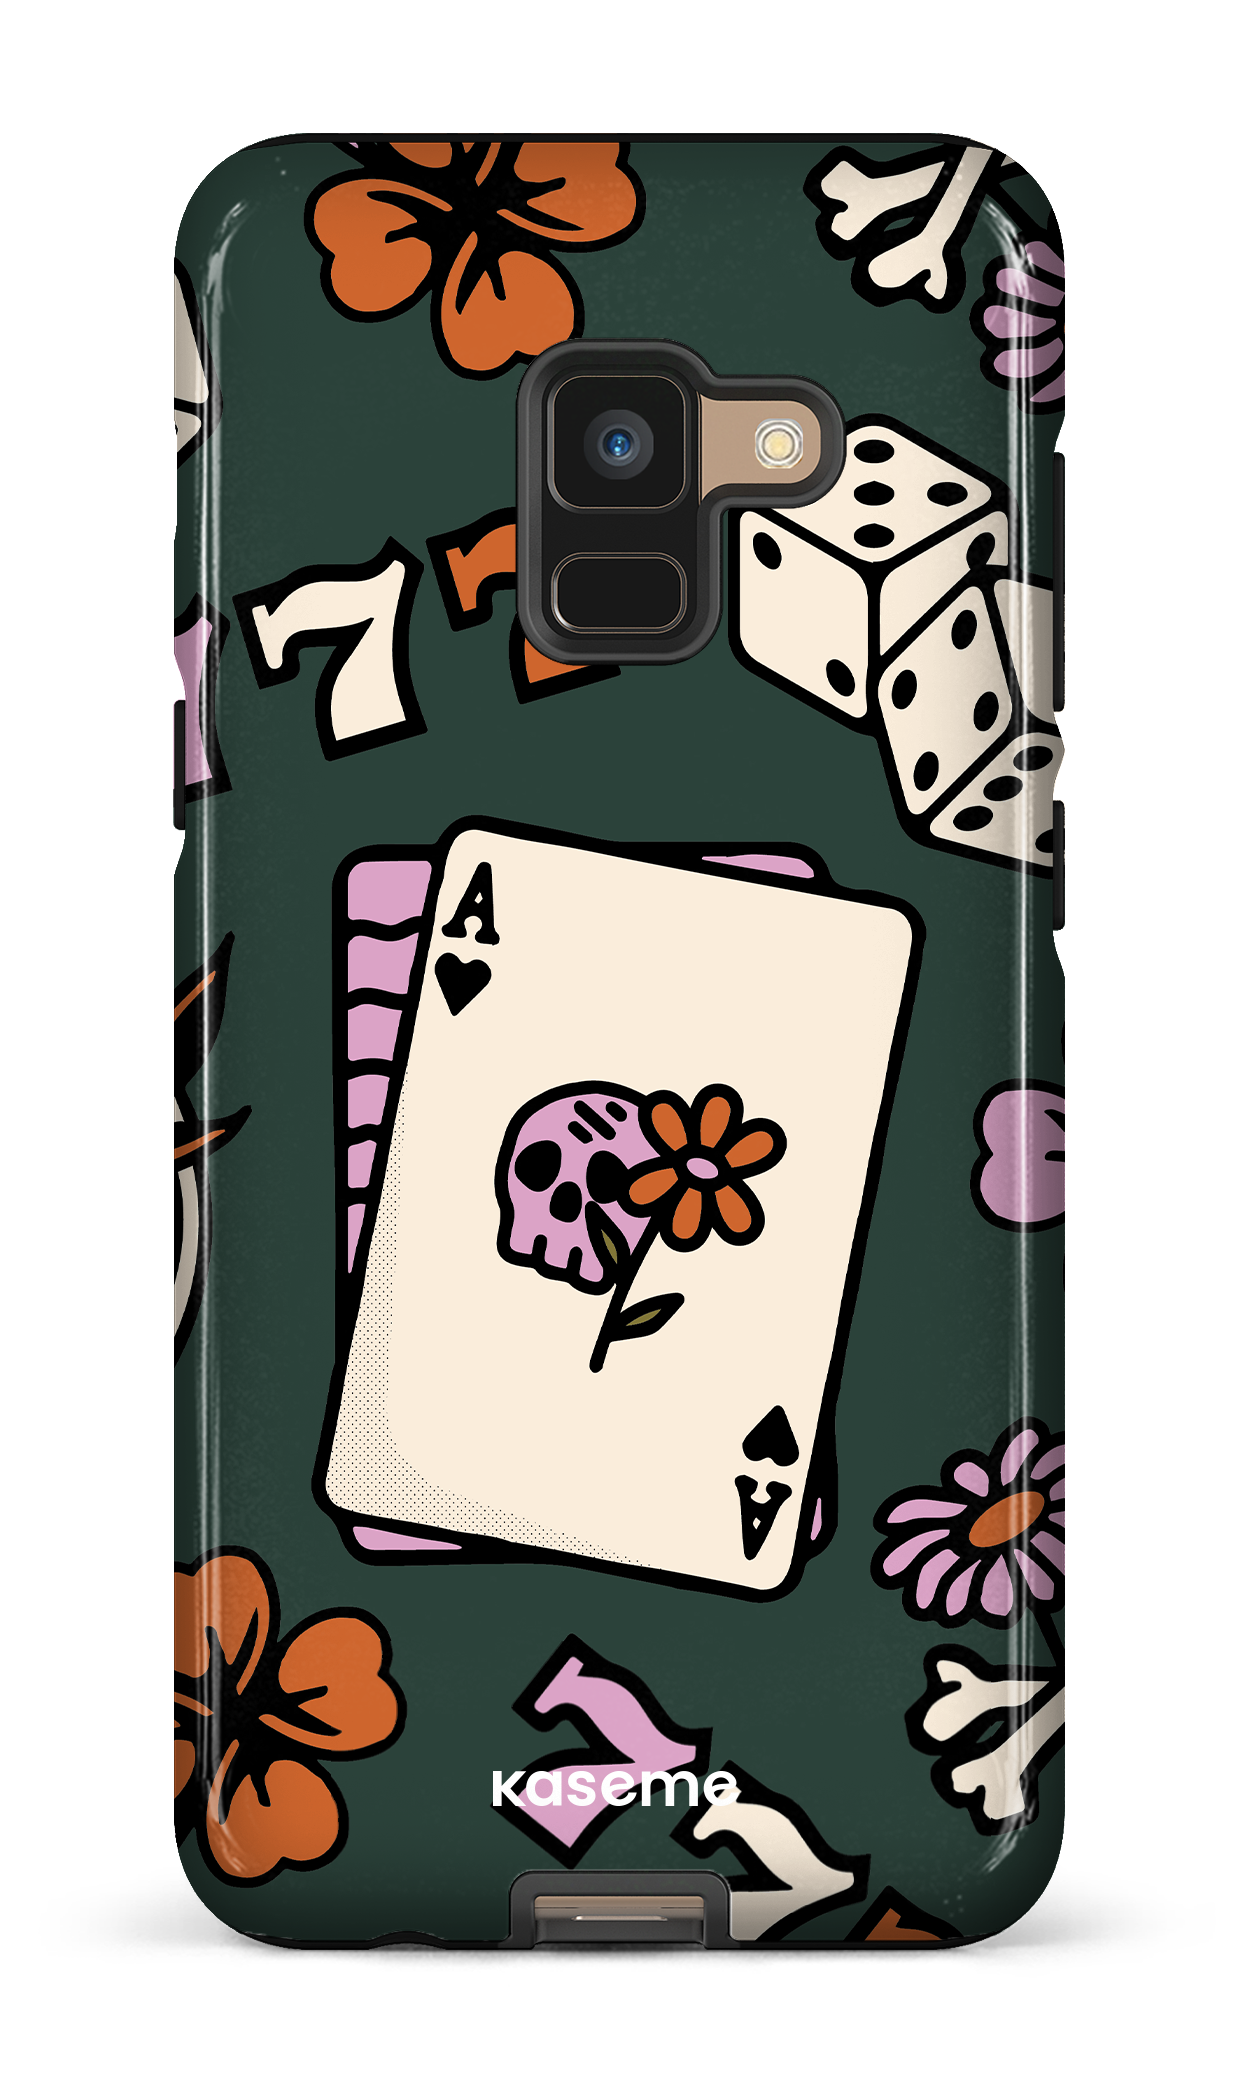 Poker Face - Galaxy A8